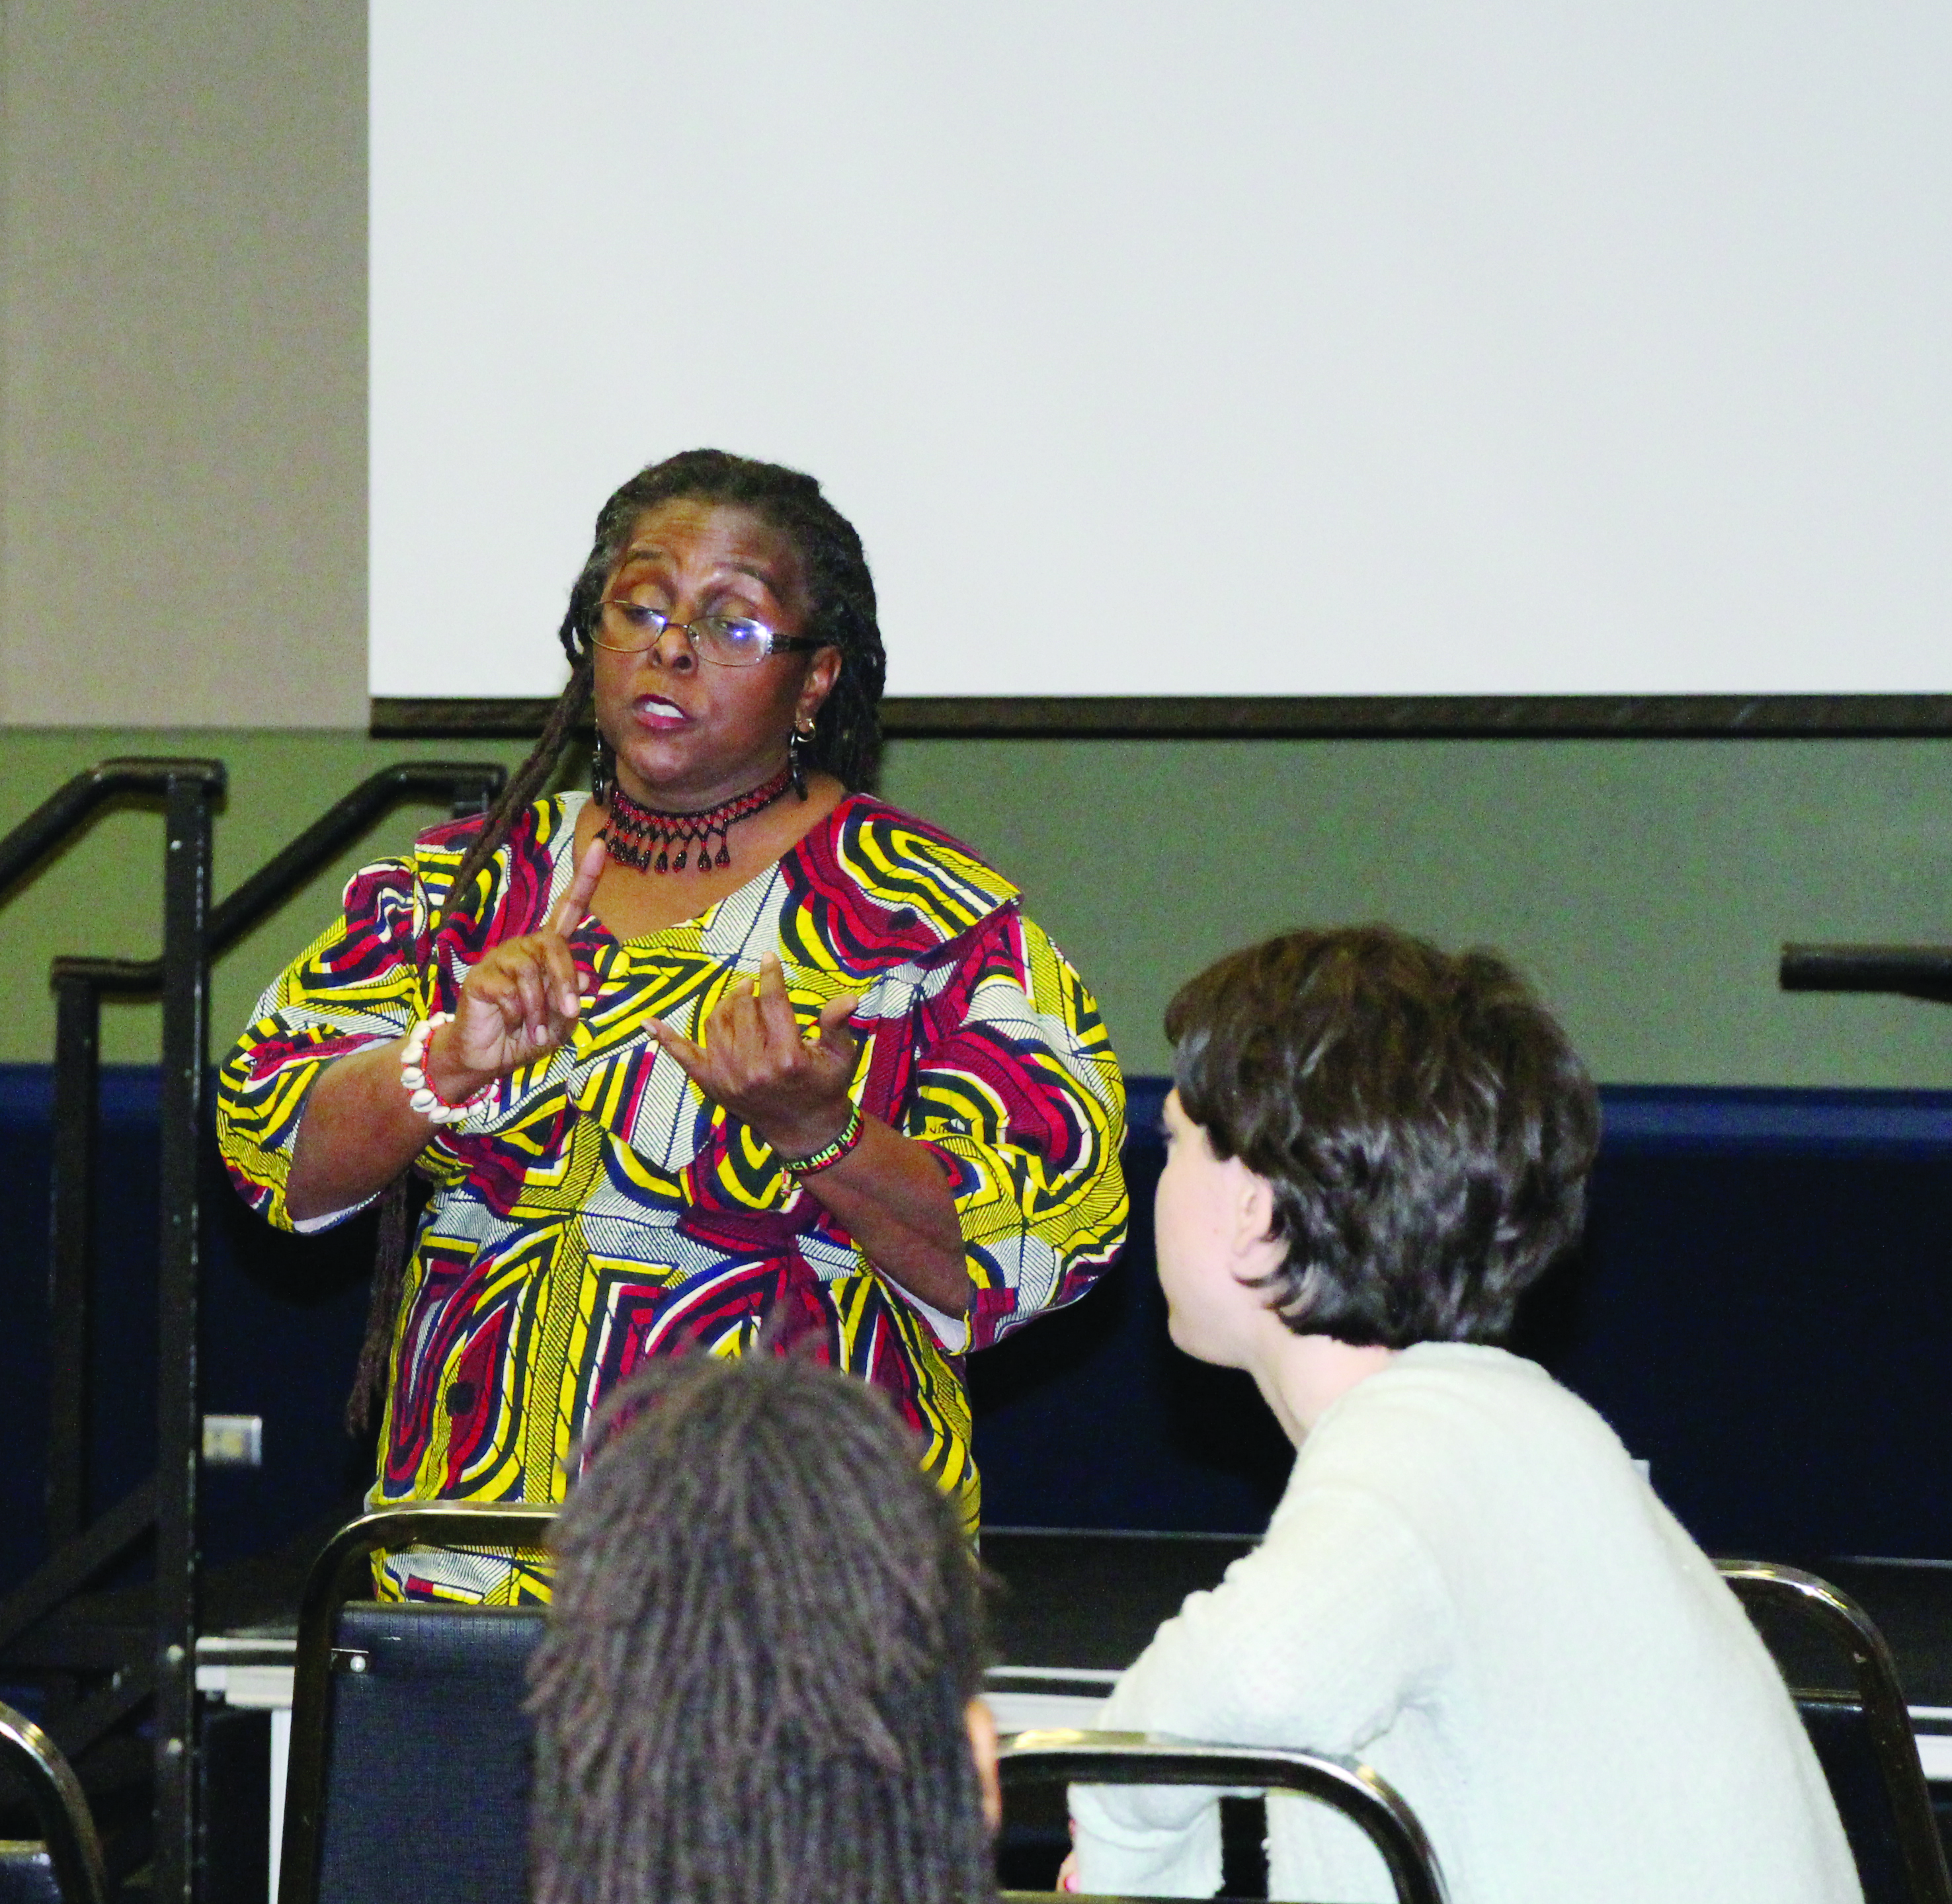 UT-Arlington professor visits DMC to discuss race issues